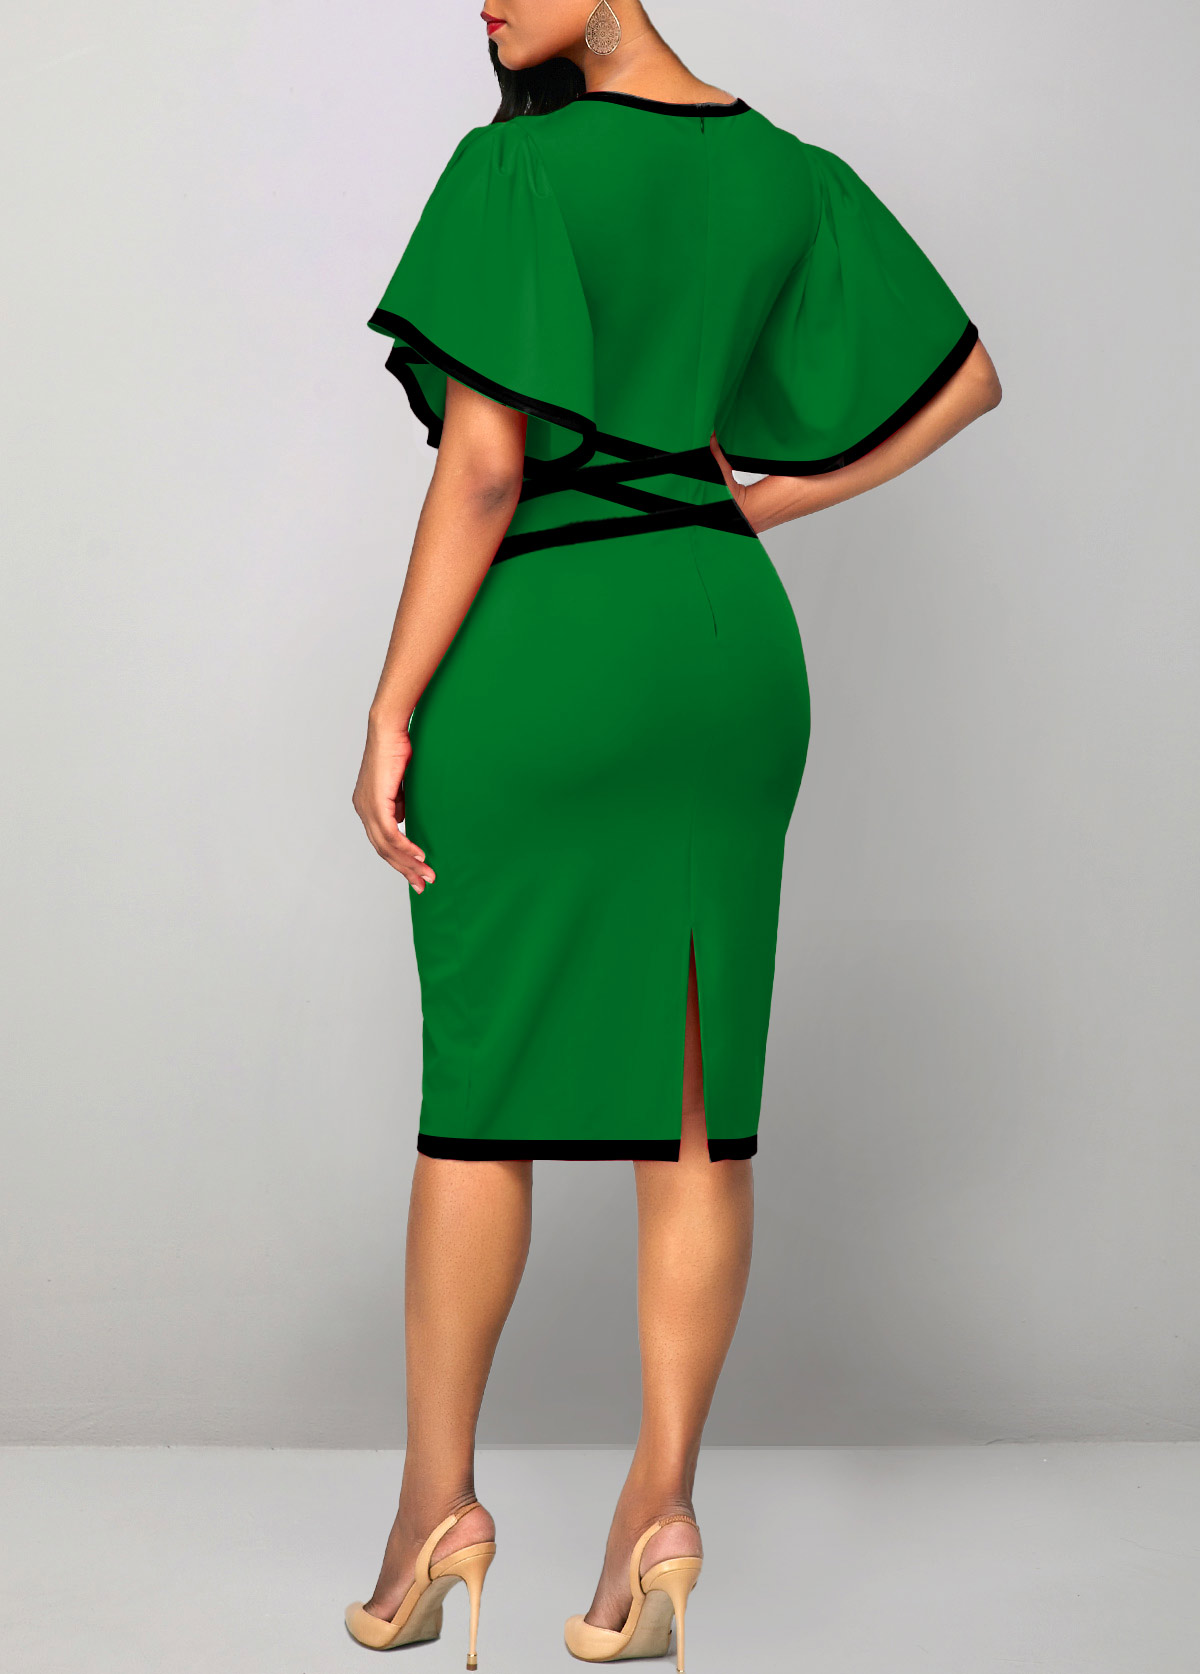 Contrast Binding Round Neck Green Bodycon Dress